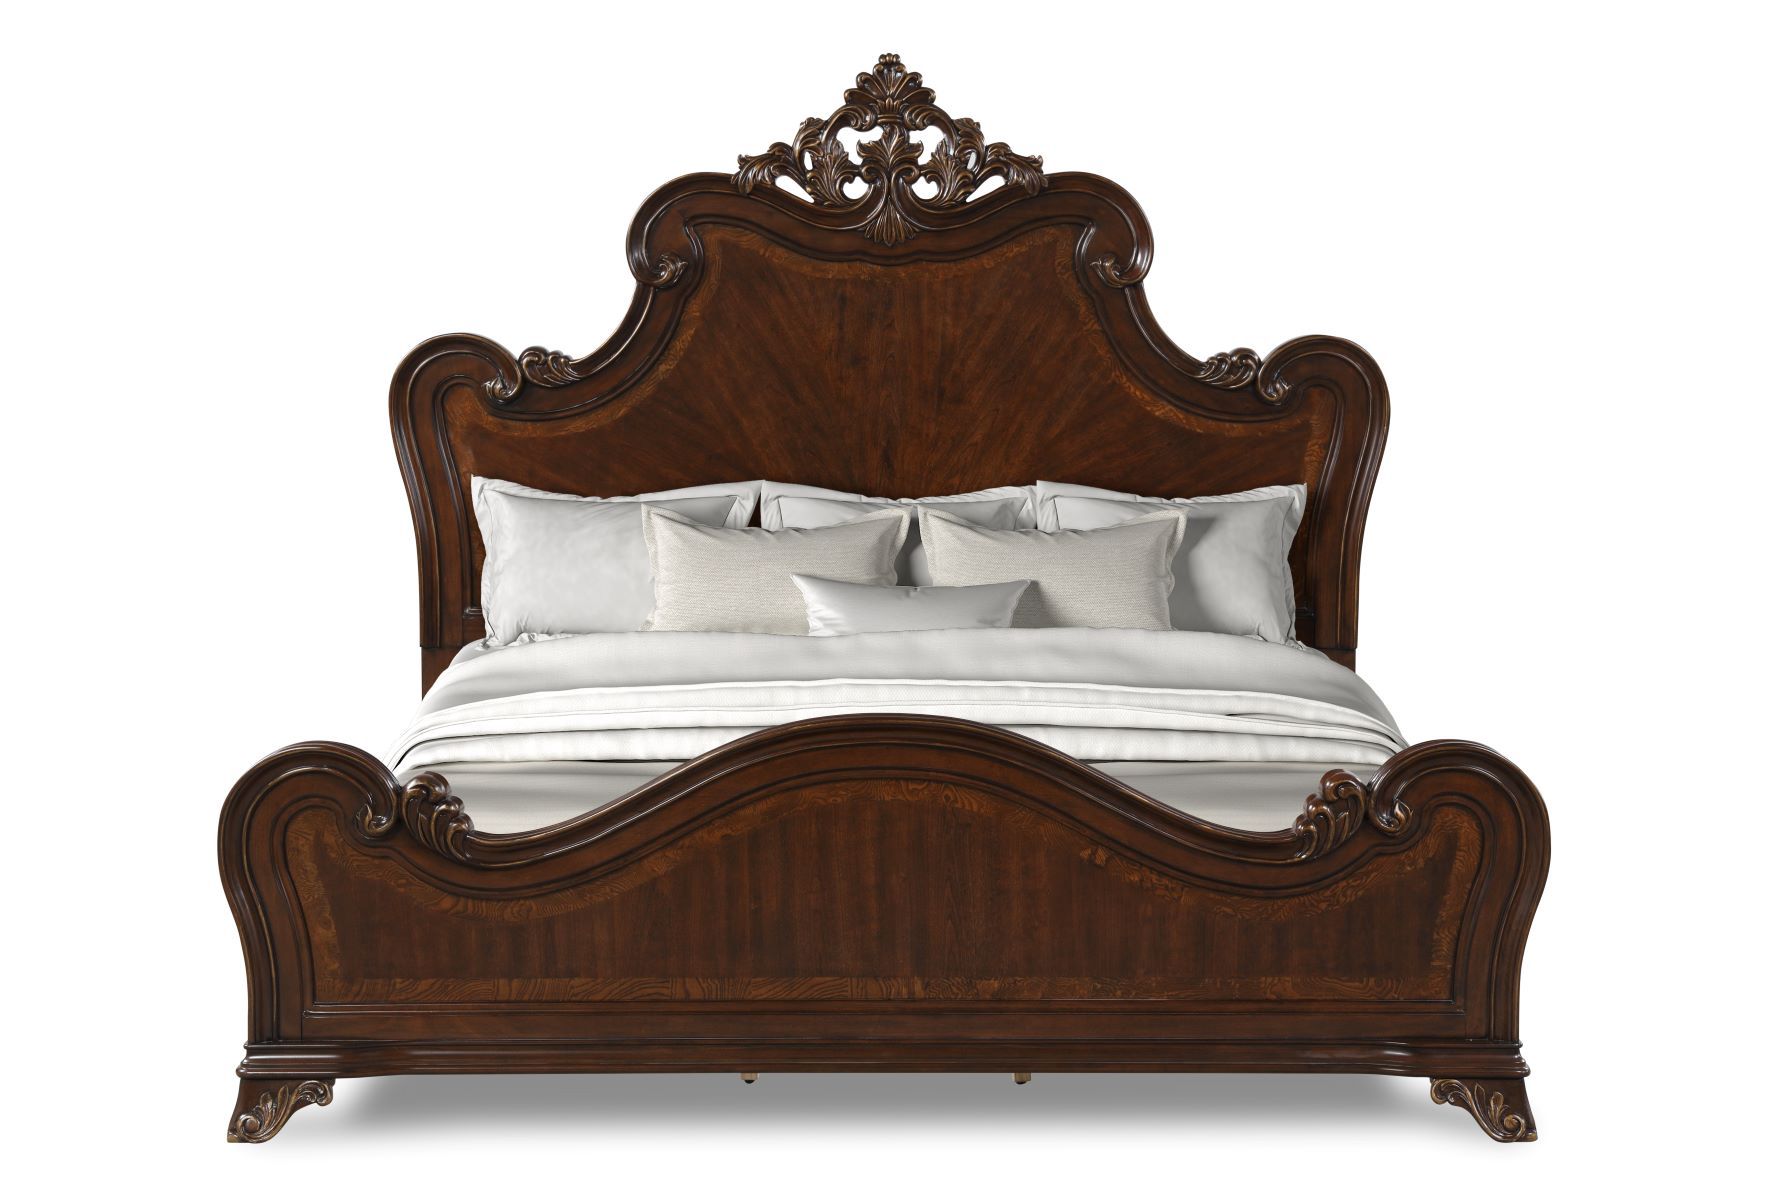 Picture of Montecito Queen Bed